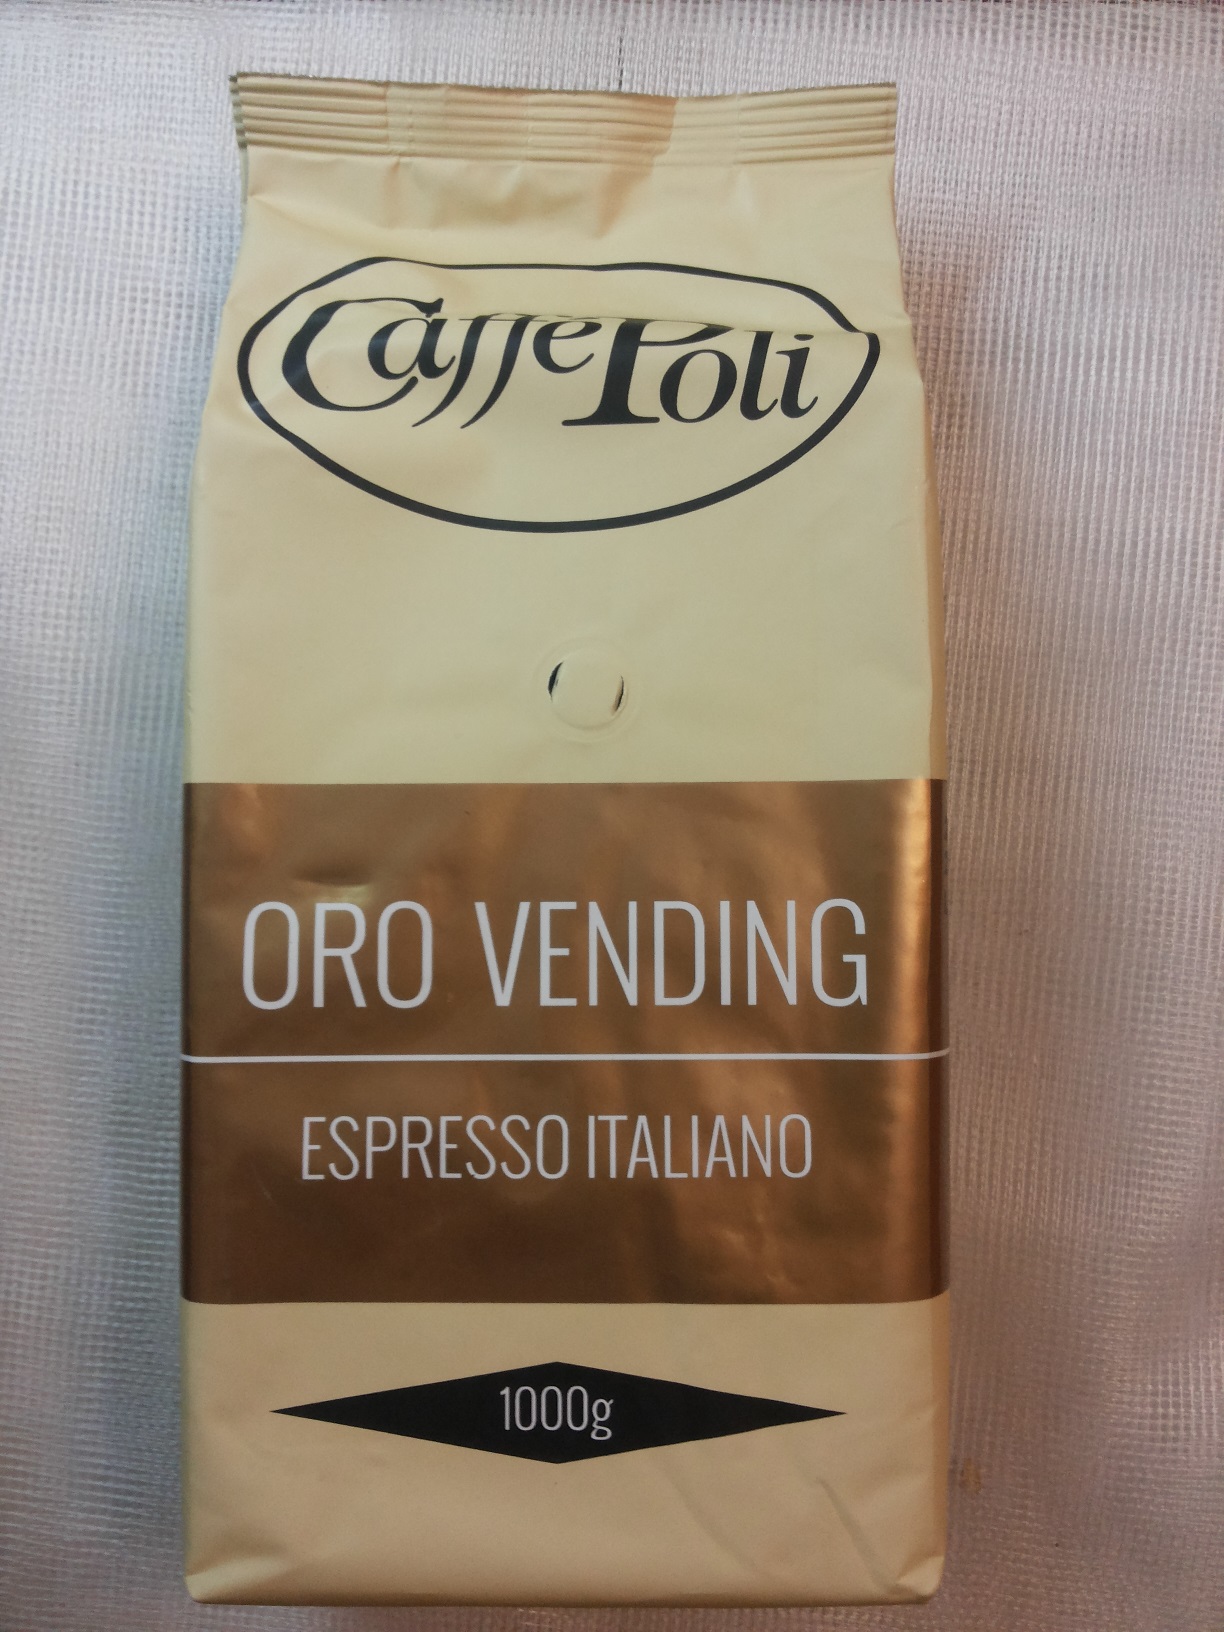 Caffe Poli Oro vending 4